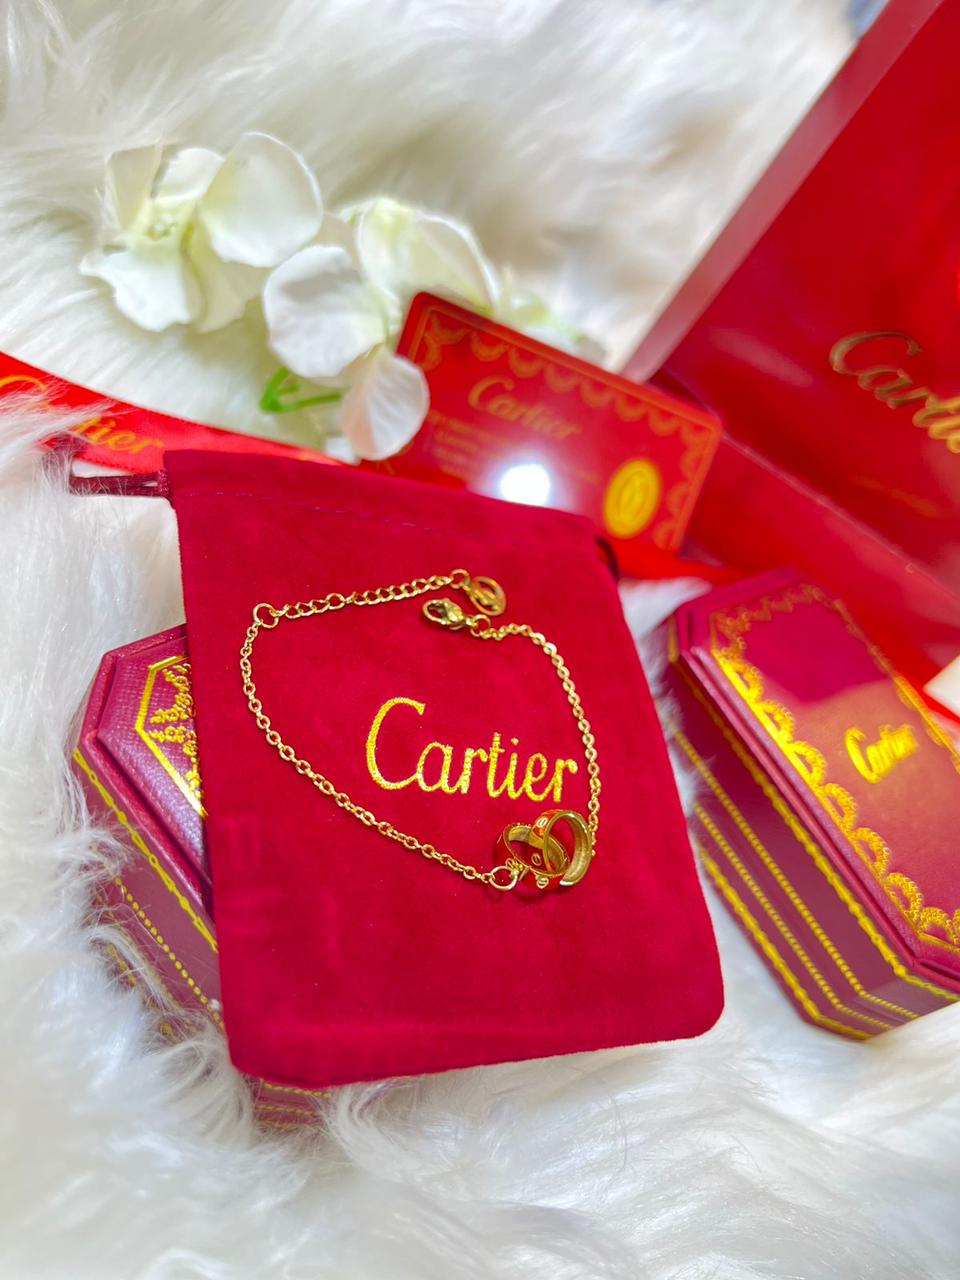 Cartier bracelets-mnh6ilvqir